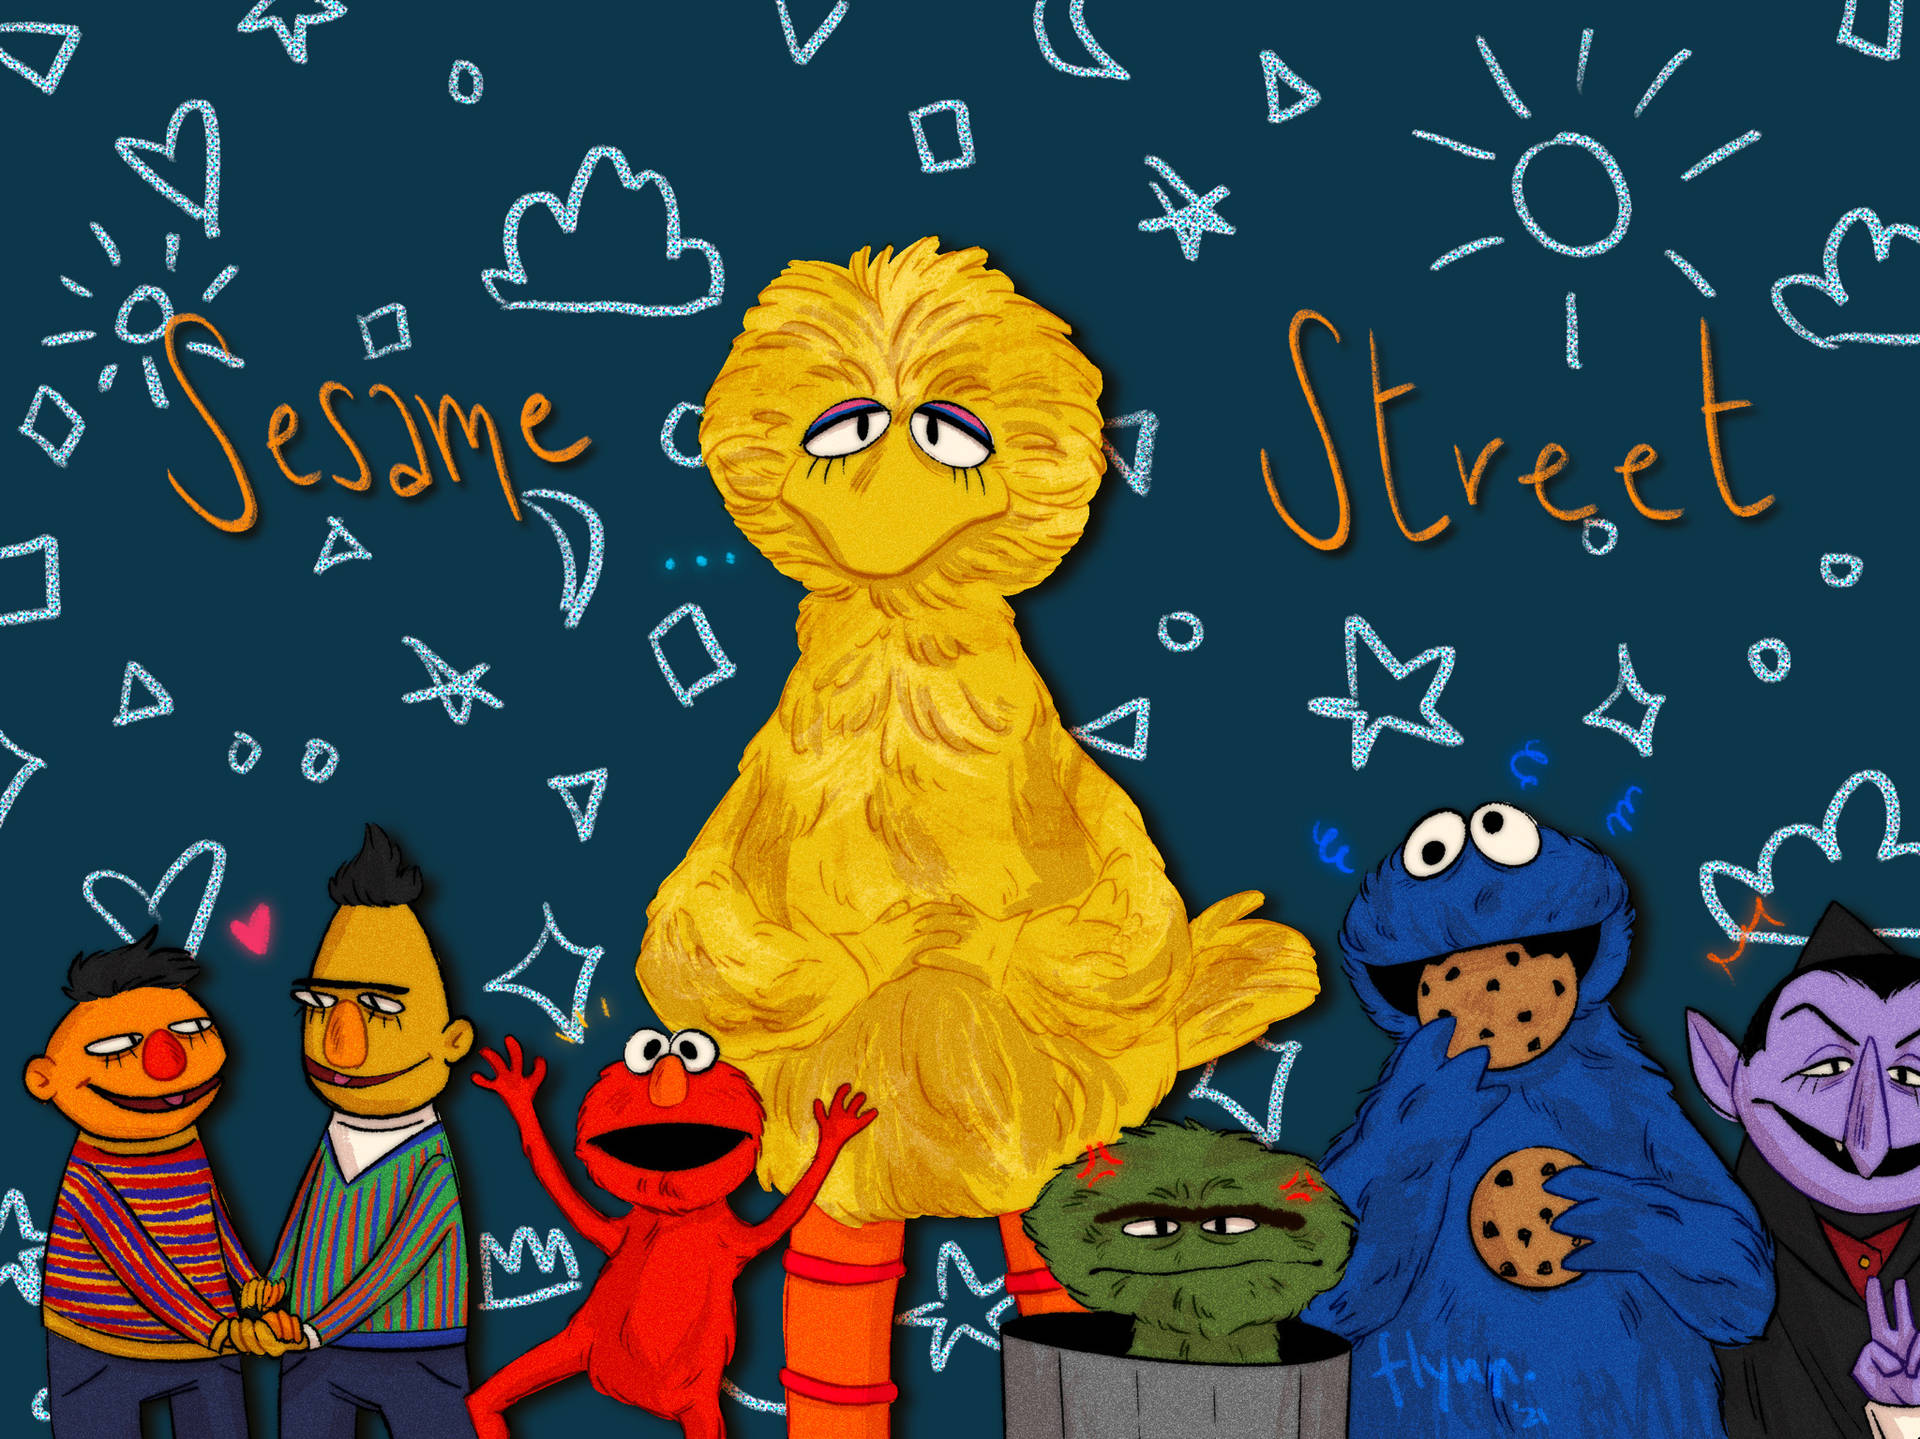 Free Sesame Street Wallpaper Downloads 100 Sesame Street Wallpapers For Free Wallpapers Com